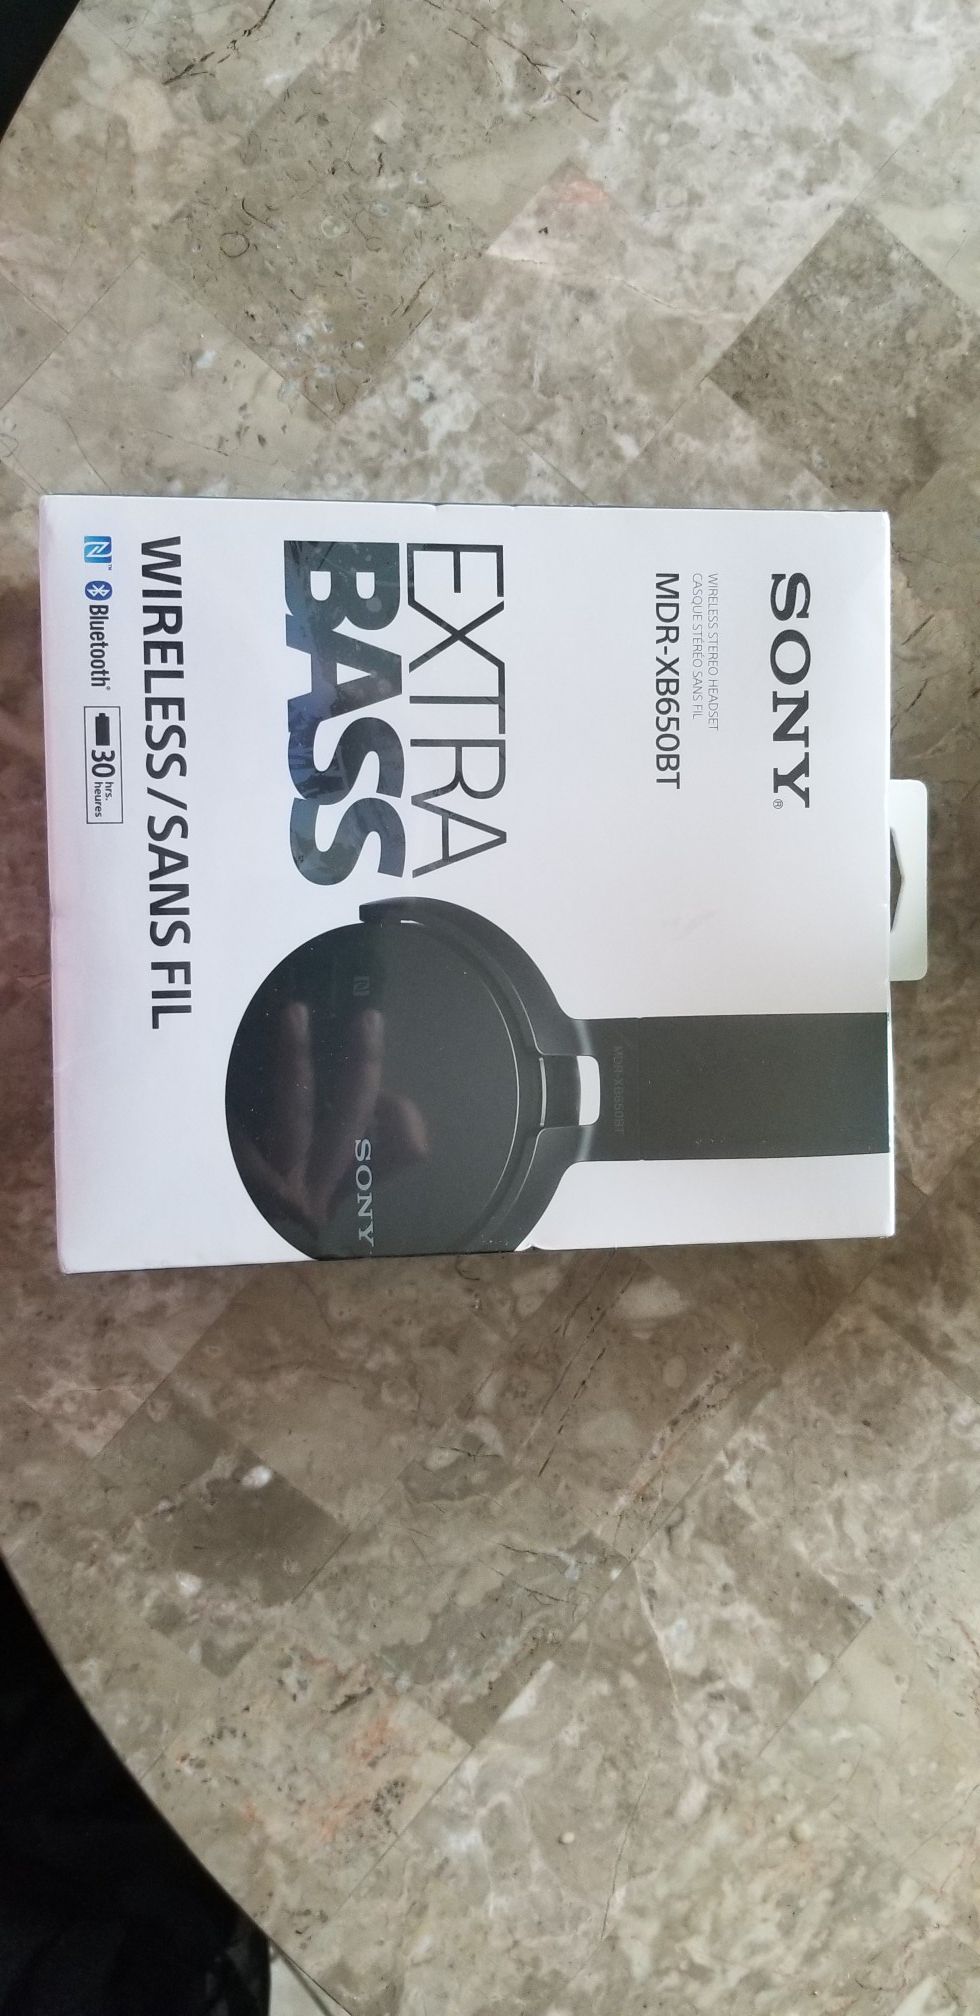 Sony wireless speakers